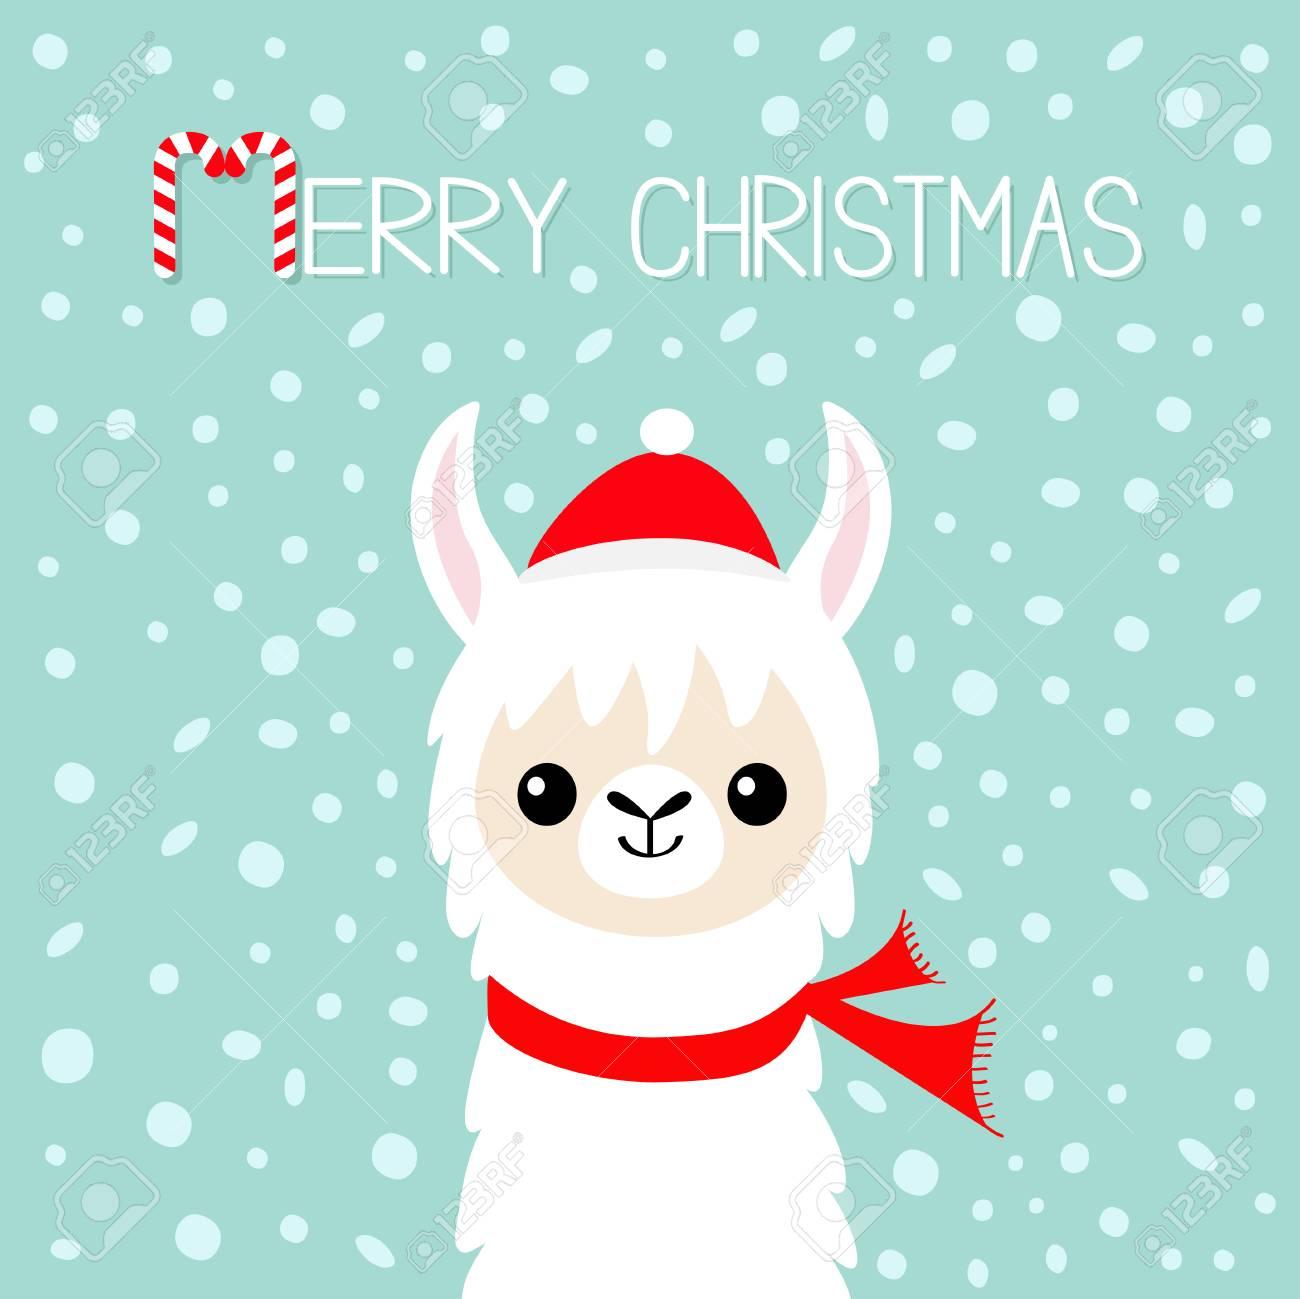 Merry Christmas Llama Alpaca Baby Face Santa Claus Red Hat